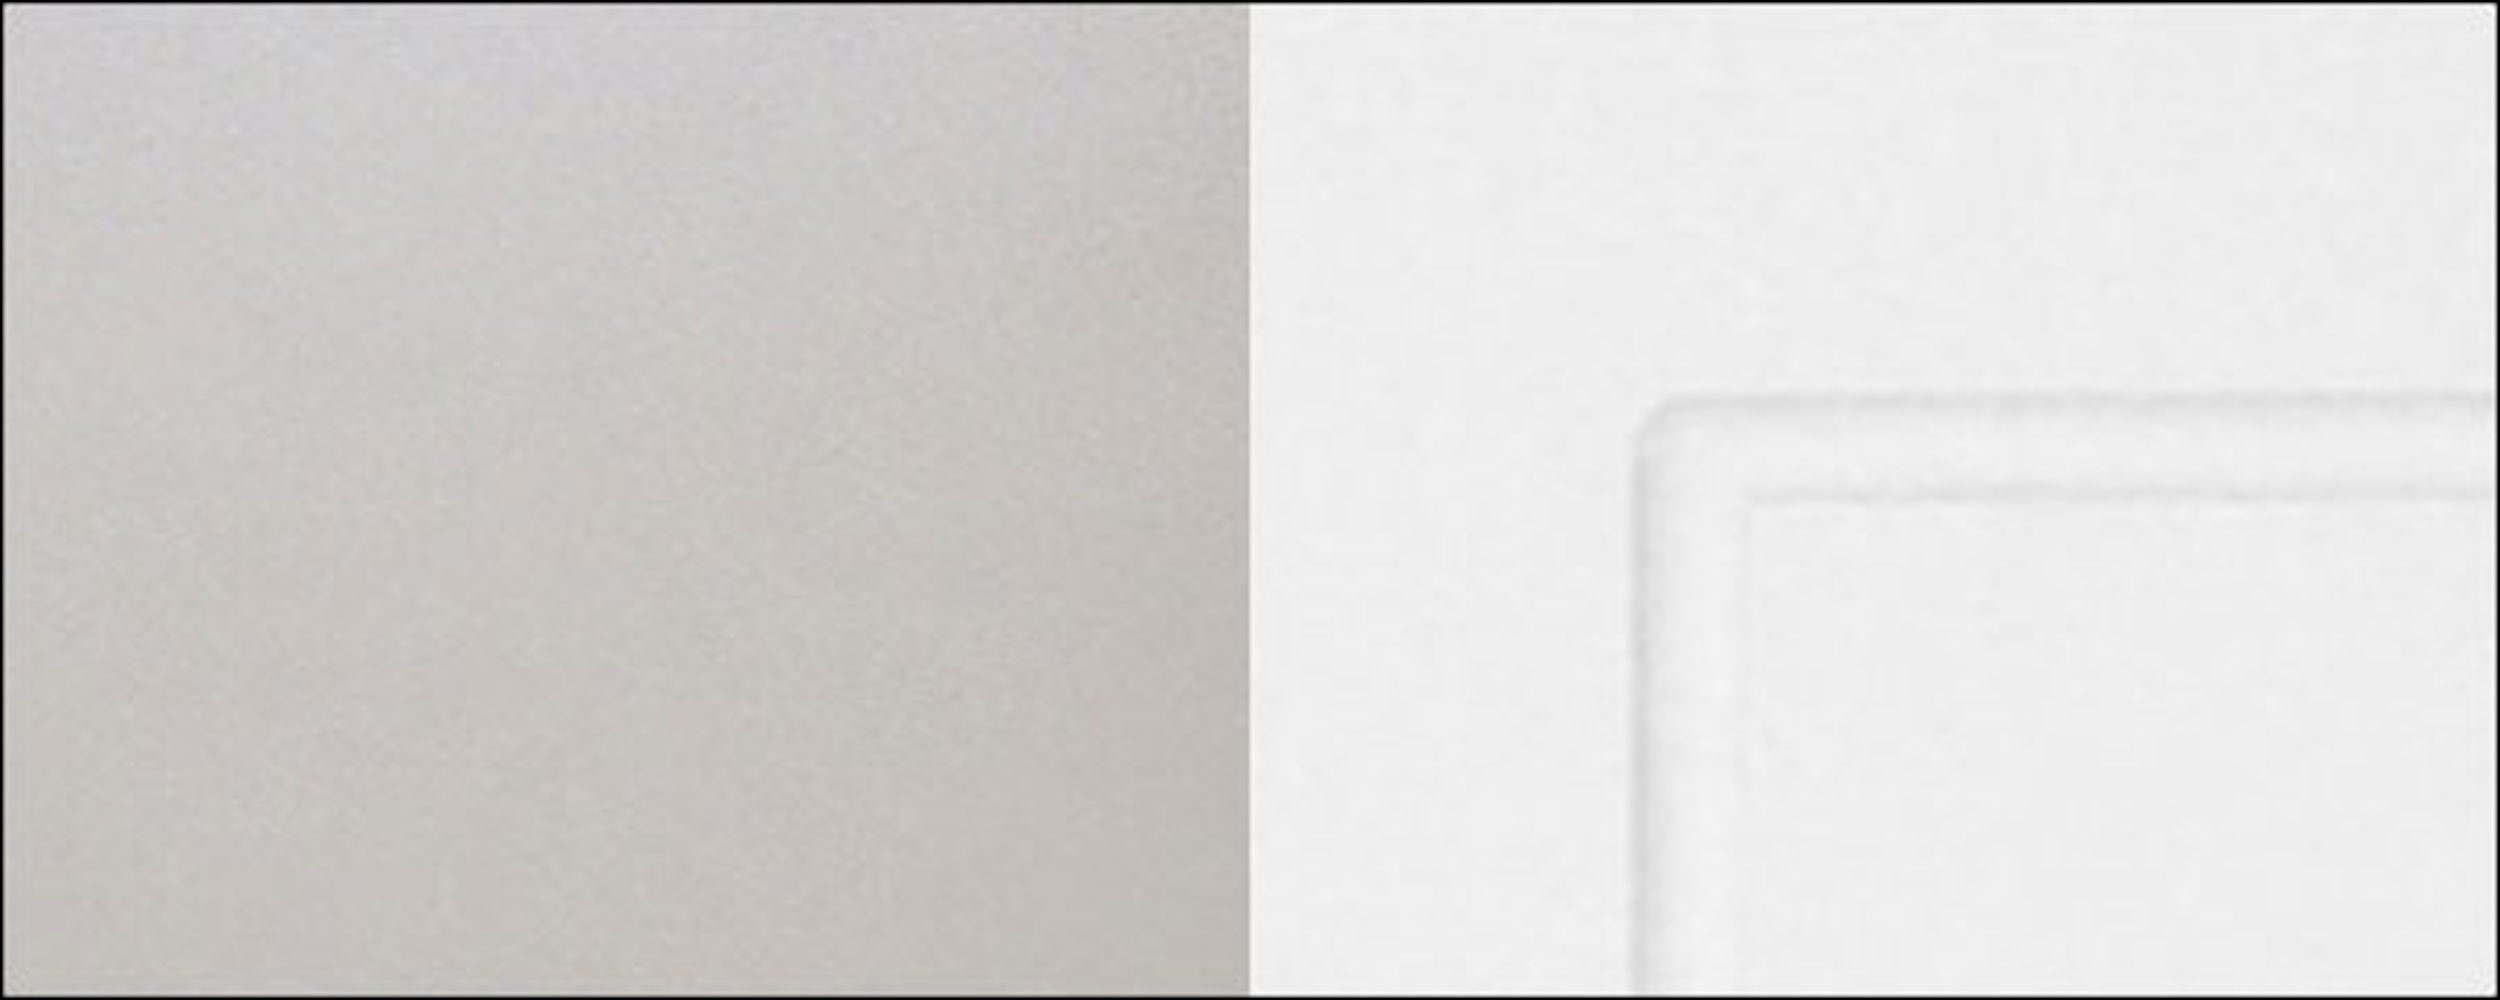 Korpusfarbe Kvantum weiß 60cm Fach Feldmann-Wohnen & wählbar Backofenumbauschrank 1 2-türig Einbaugerät matt (Kvantum) Front- für